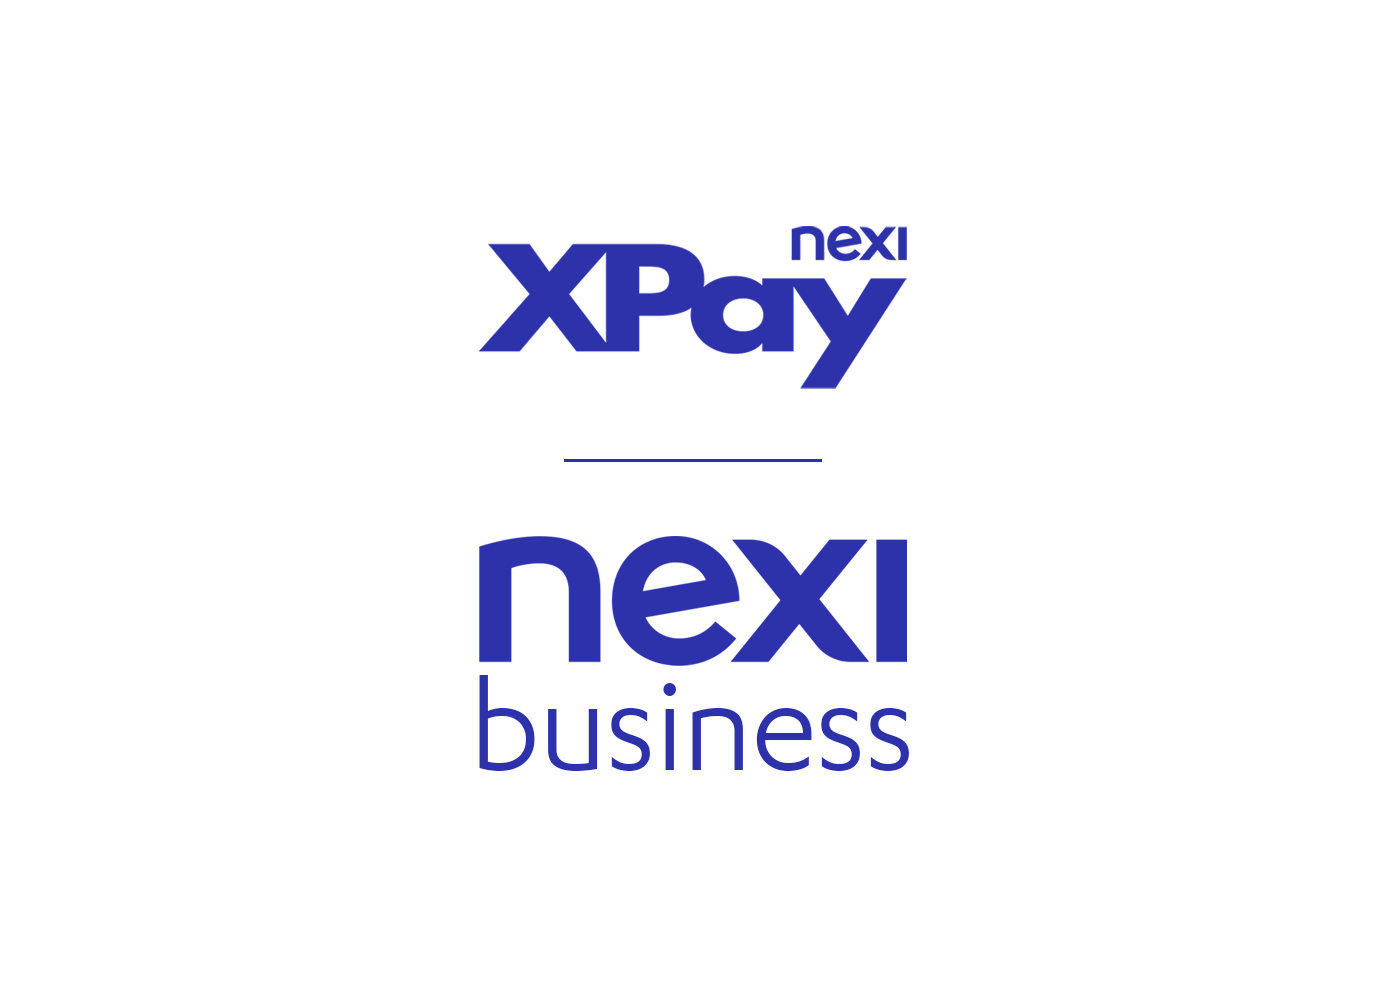 Nexi XPay e Nexi Business